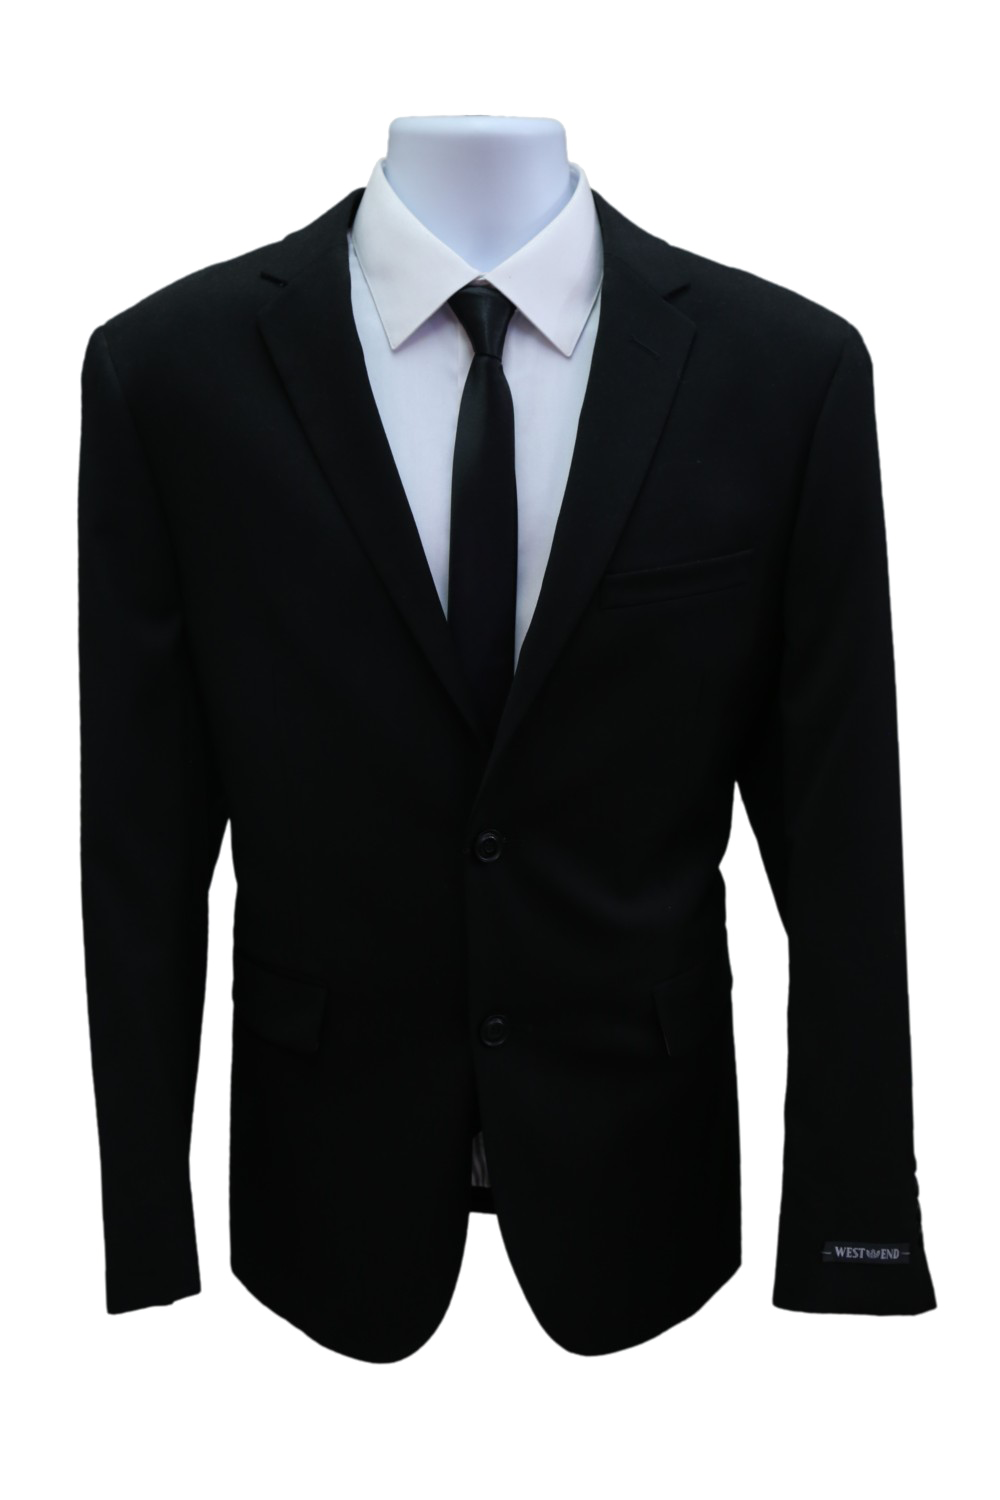 Black Suit PNG Image Background